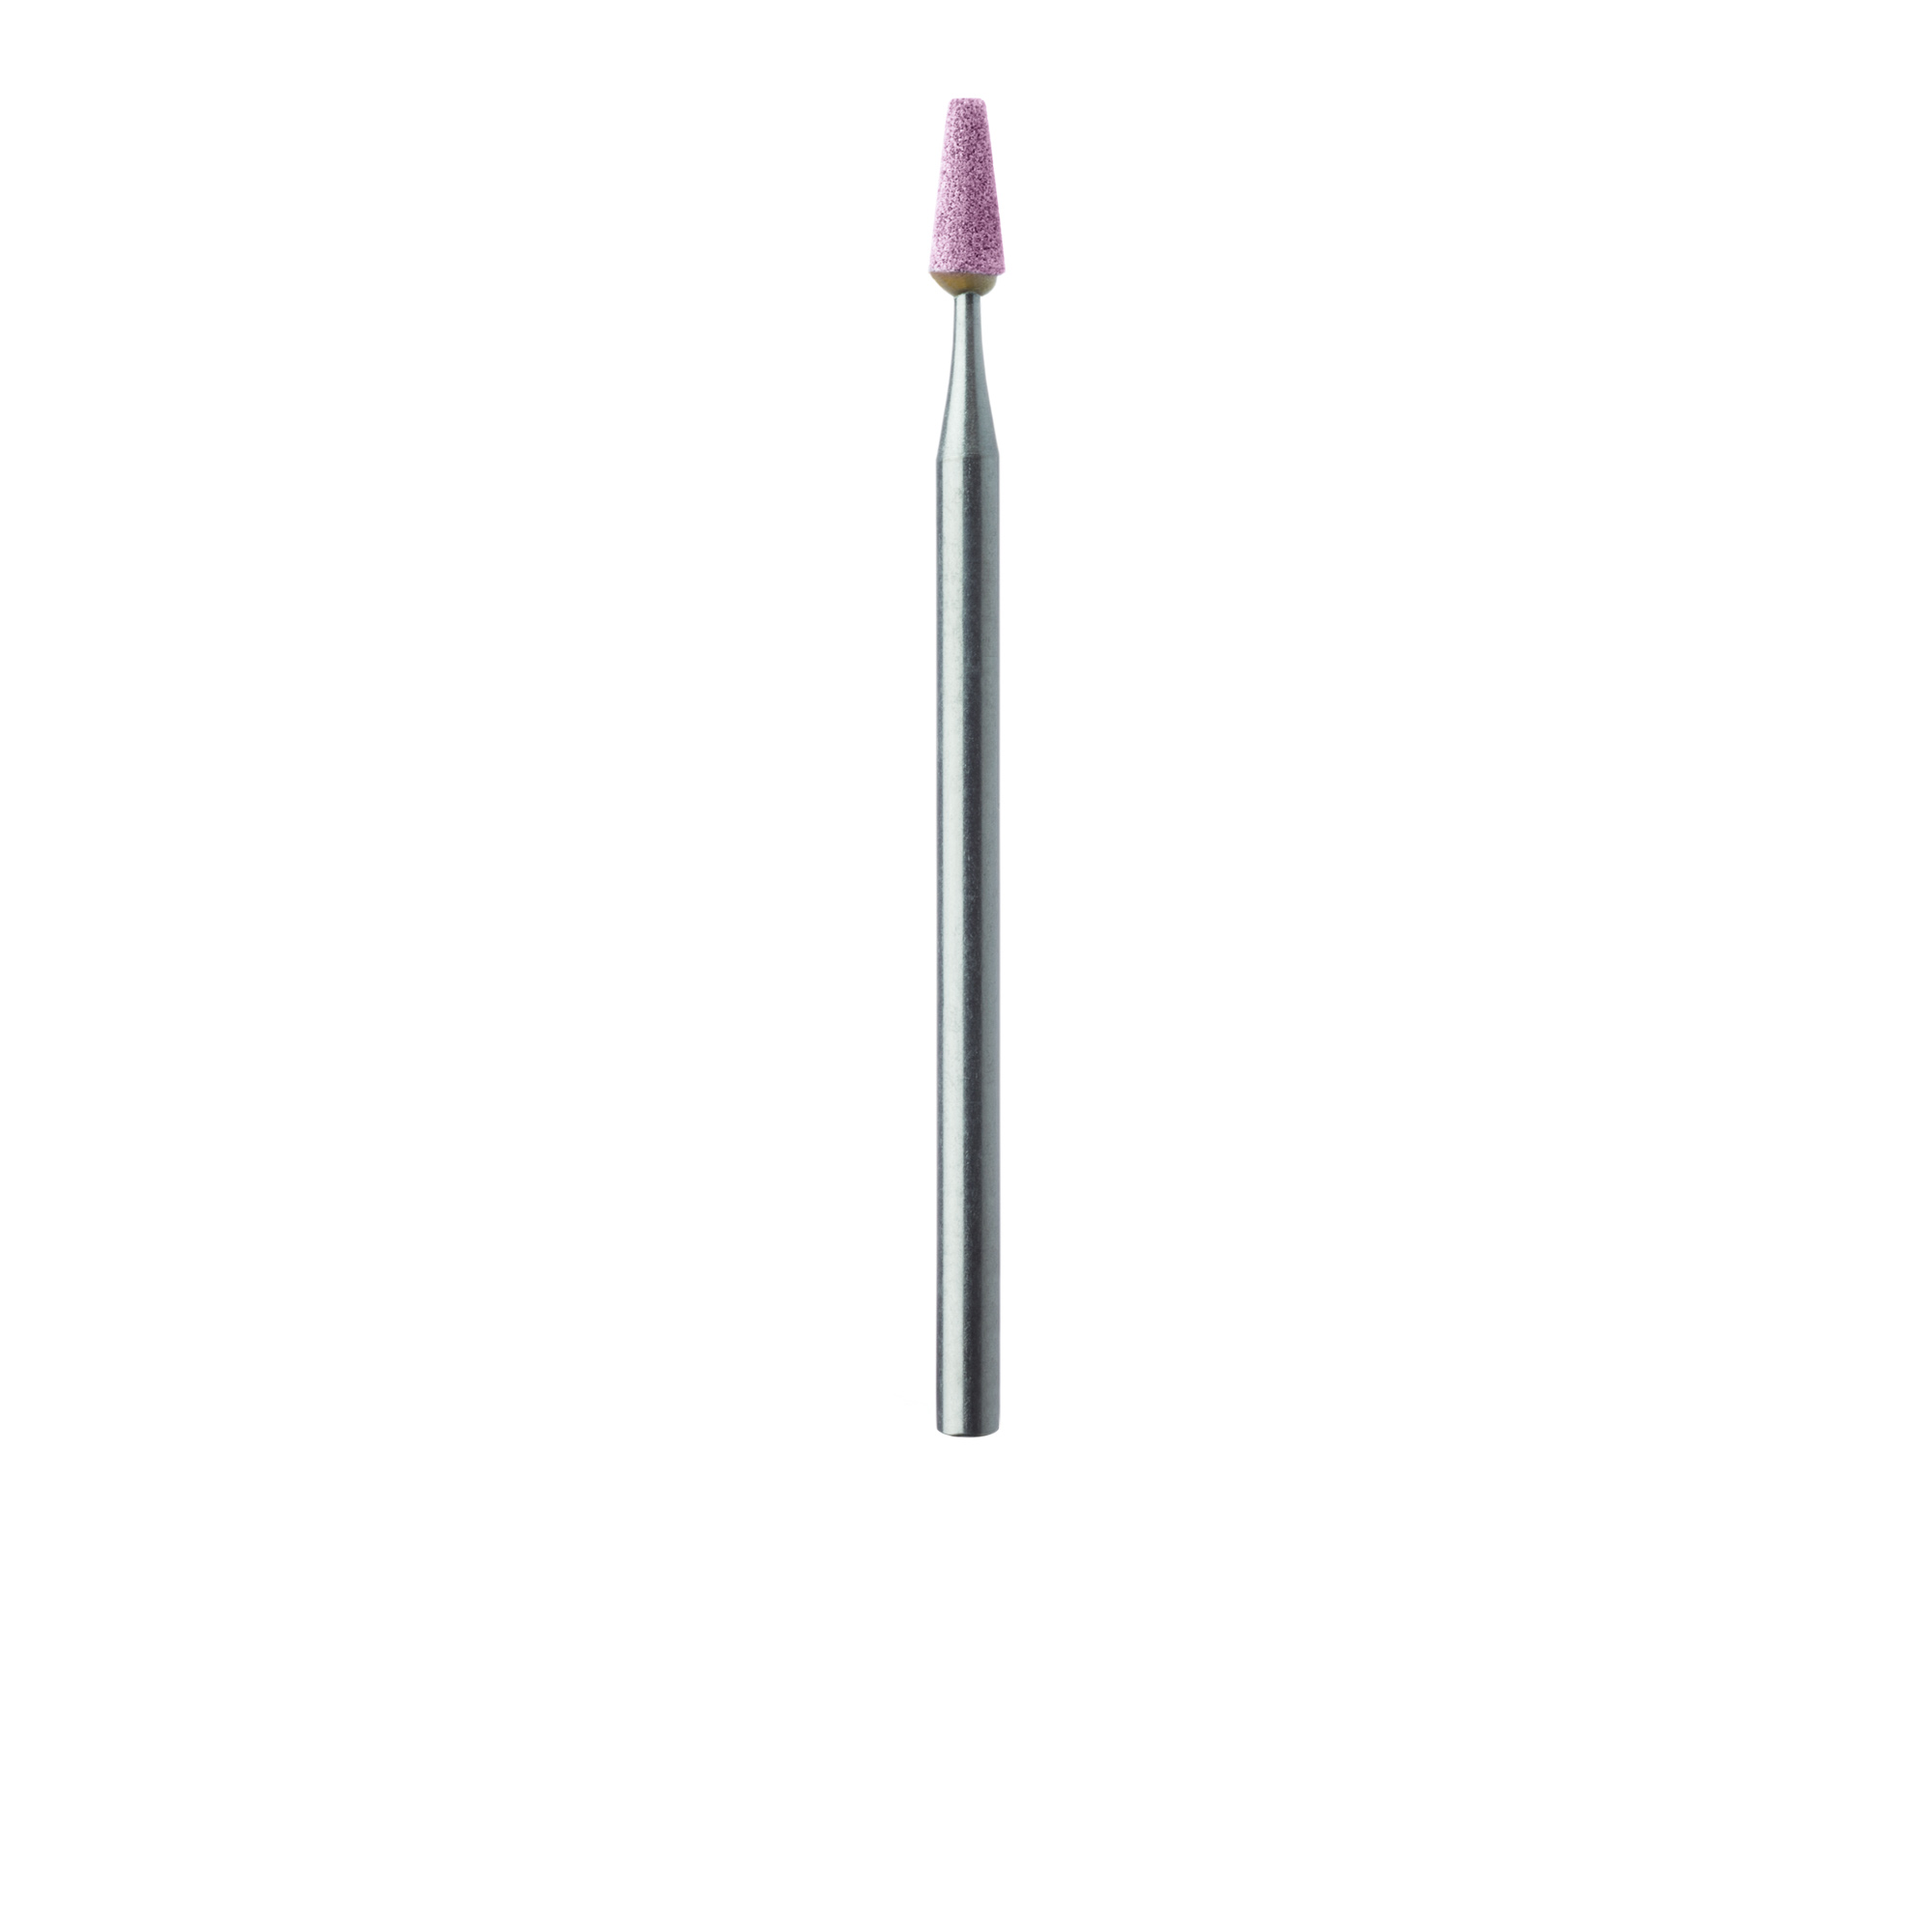 649-025-HP-P Abrasive, Pink, Medium, 2.5mm Ø, HP